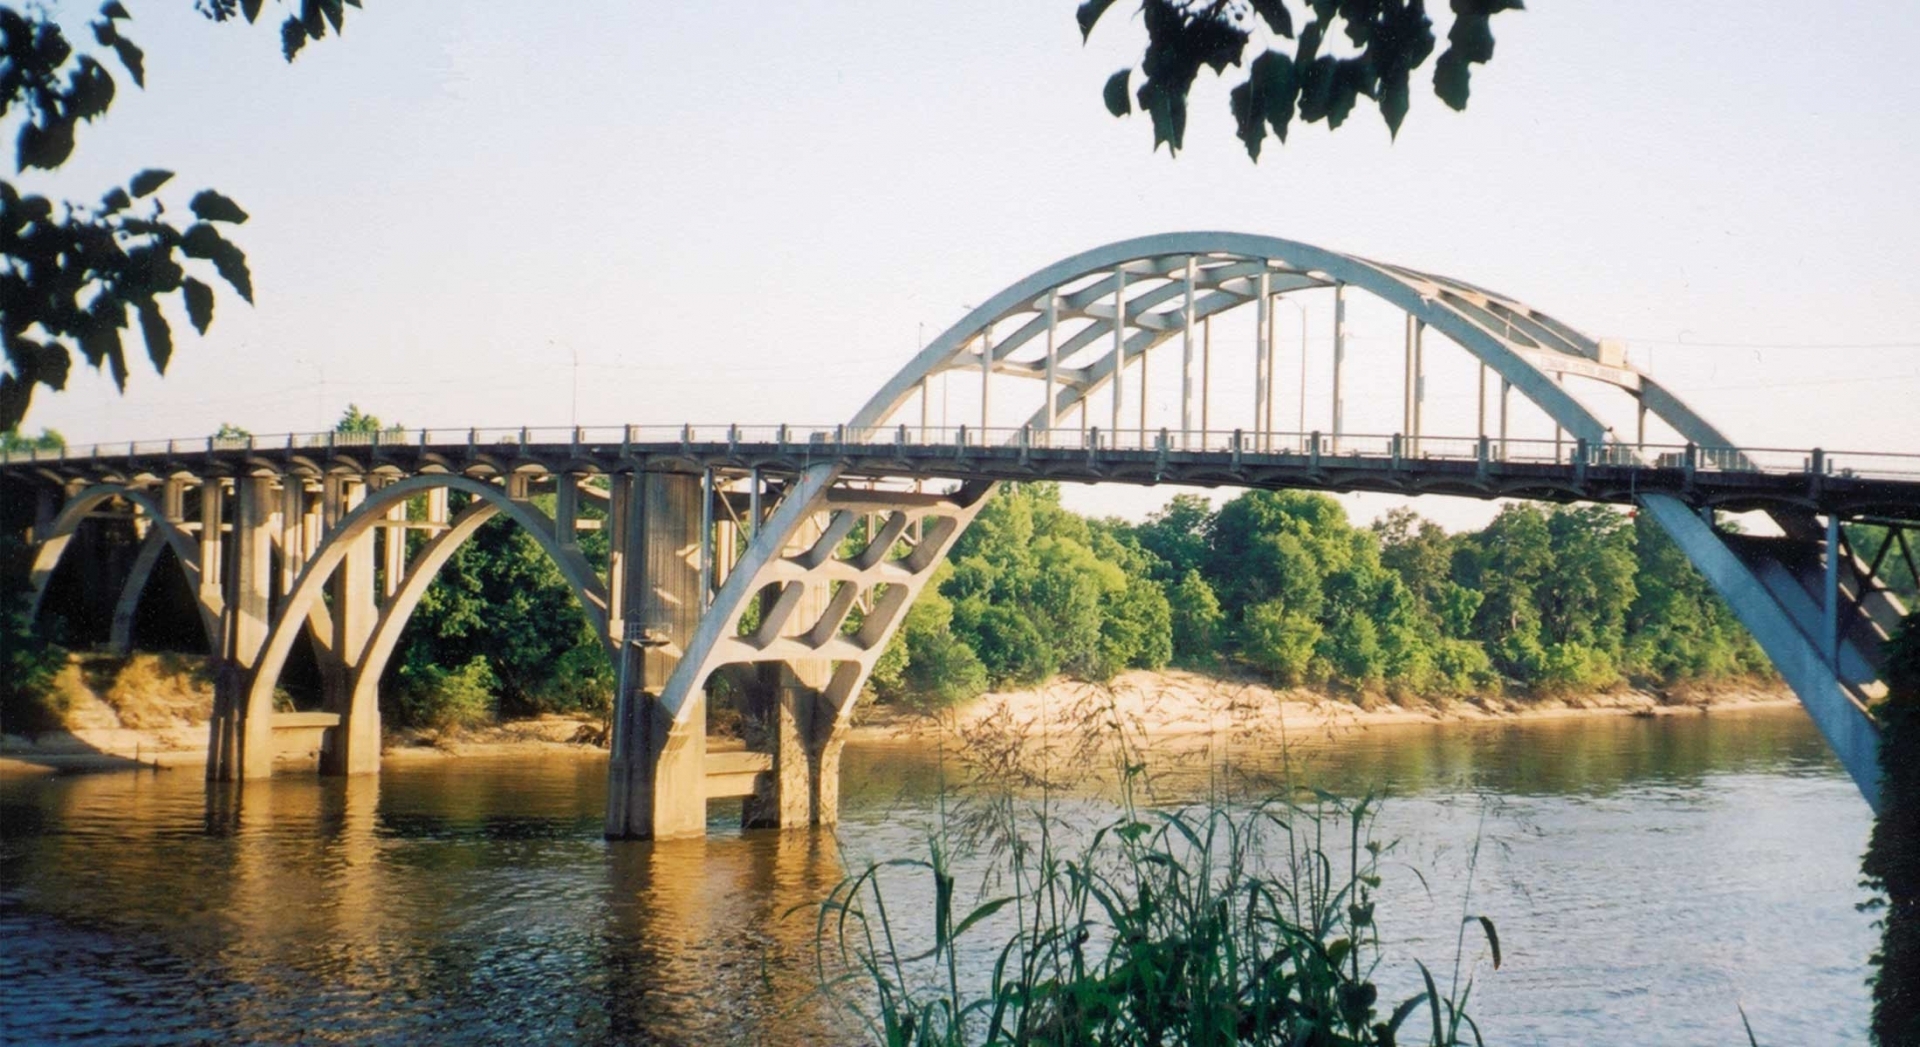 Edmund Pettus Bridge over the Alabama River in Selma, AL